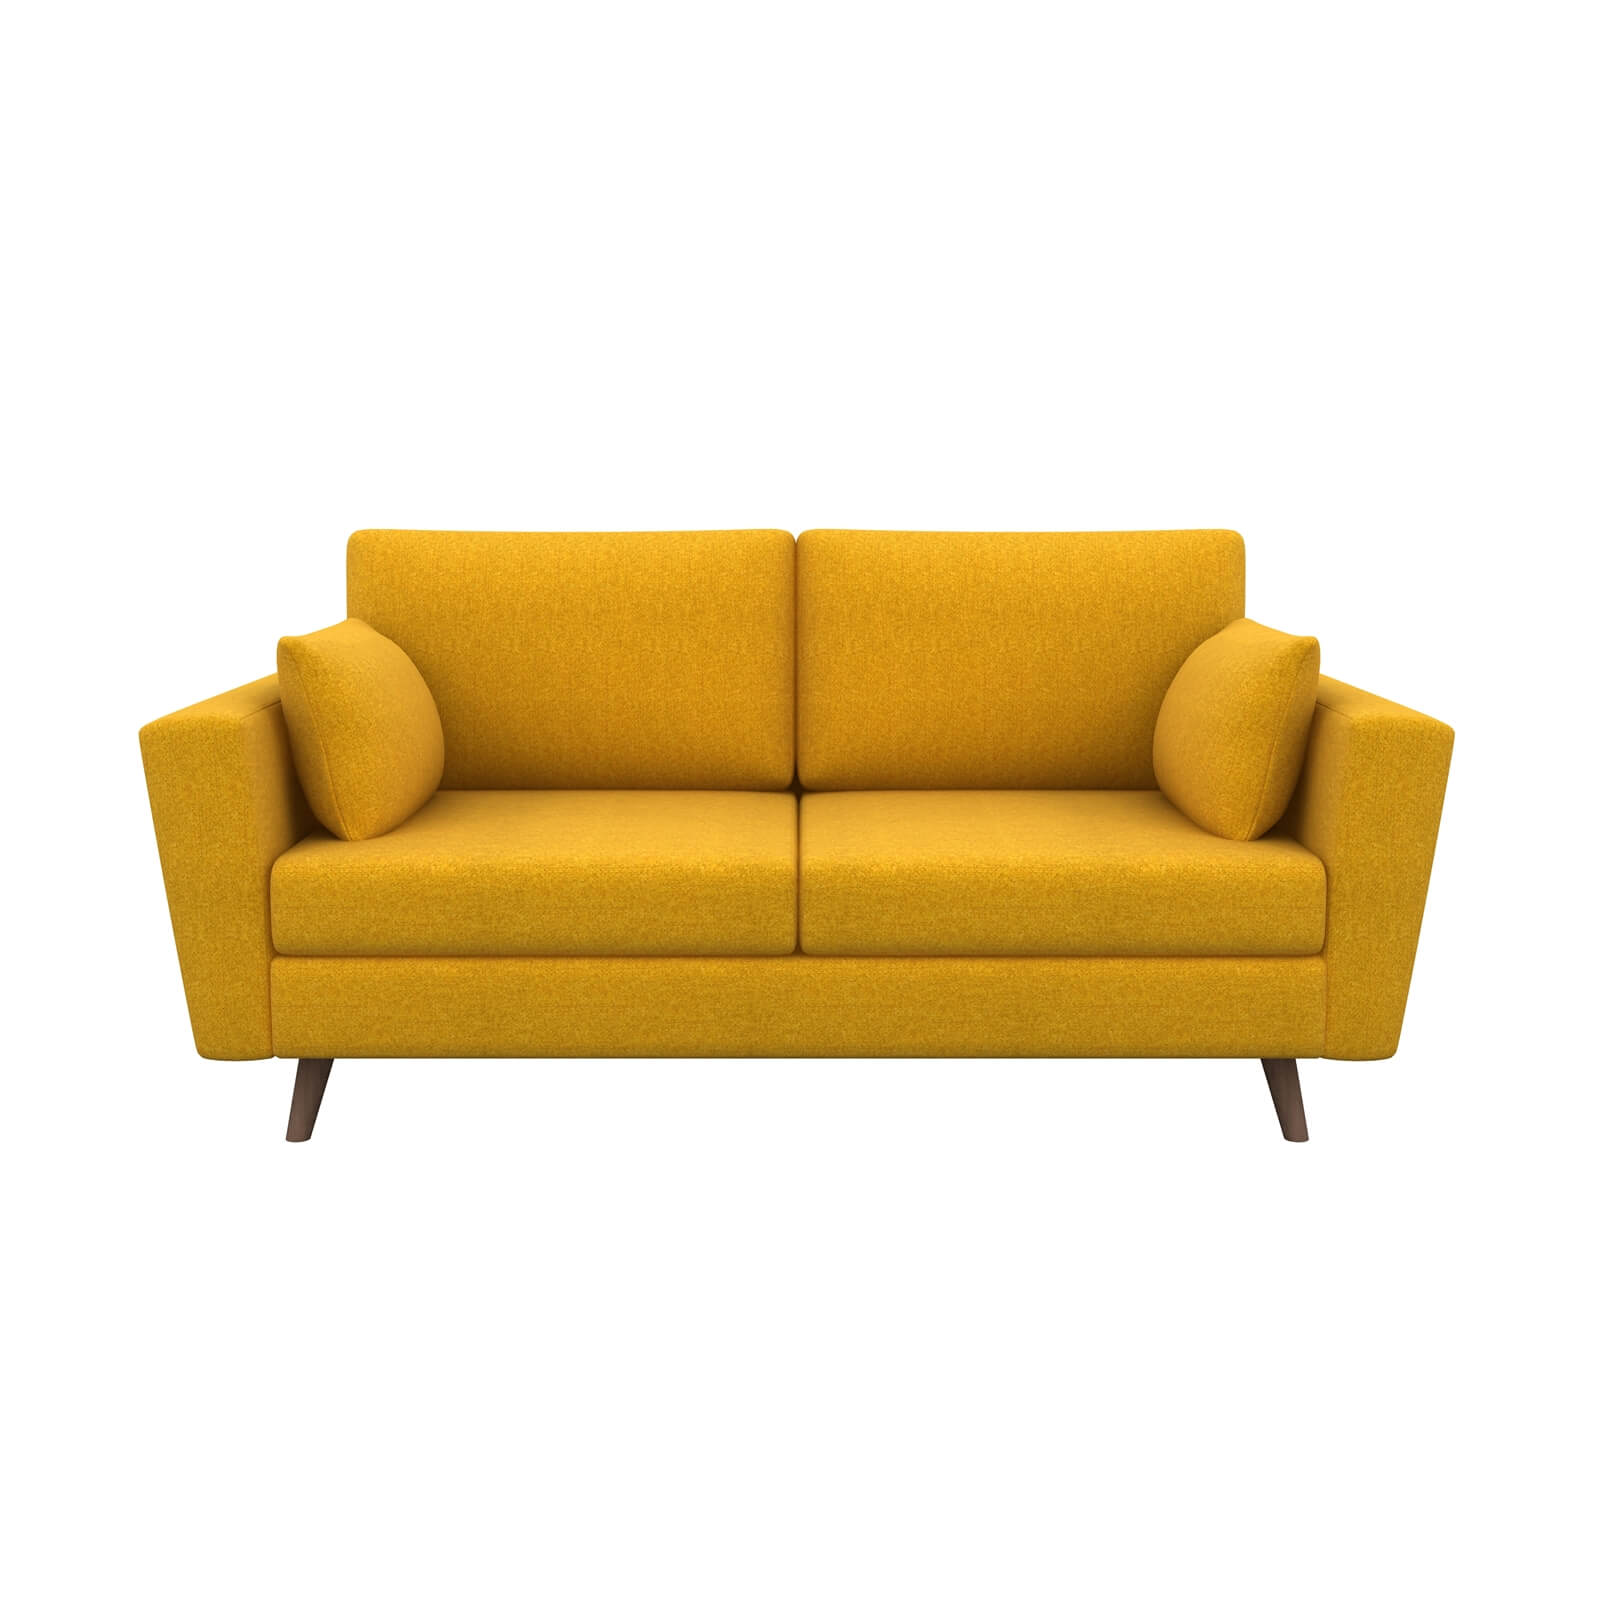 Lucia 3 Seater Sofa - Mustard